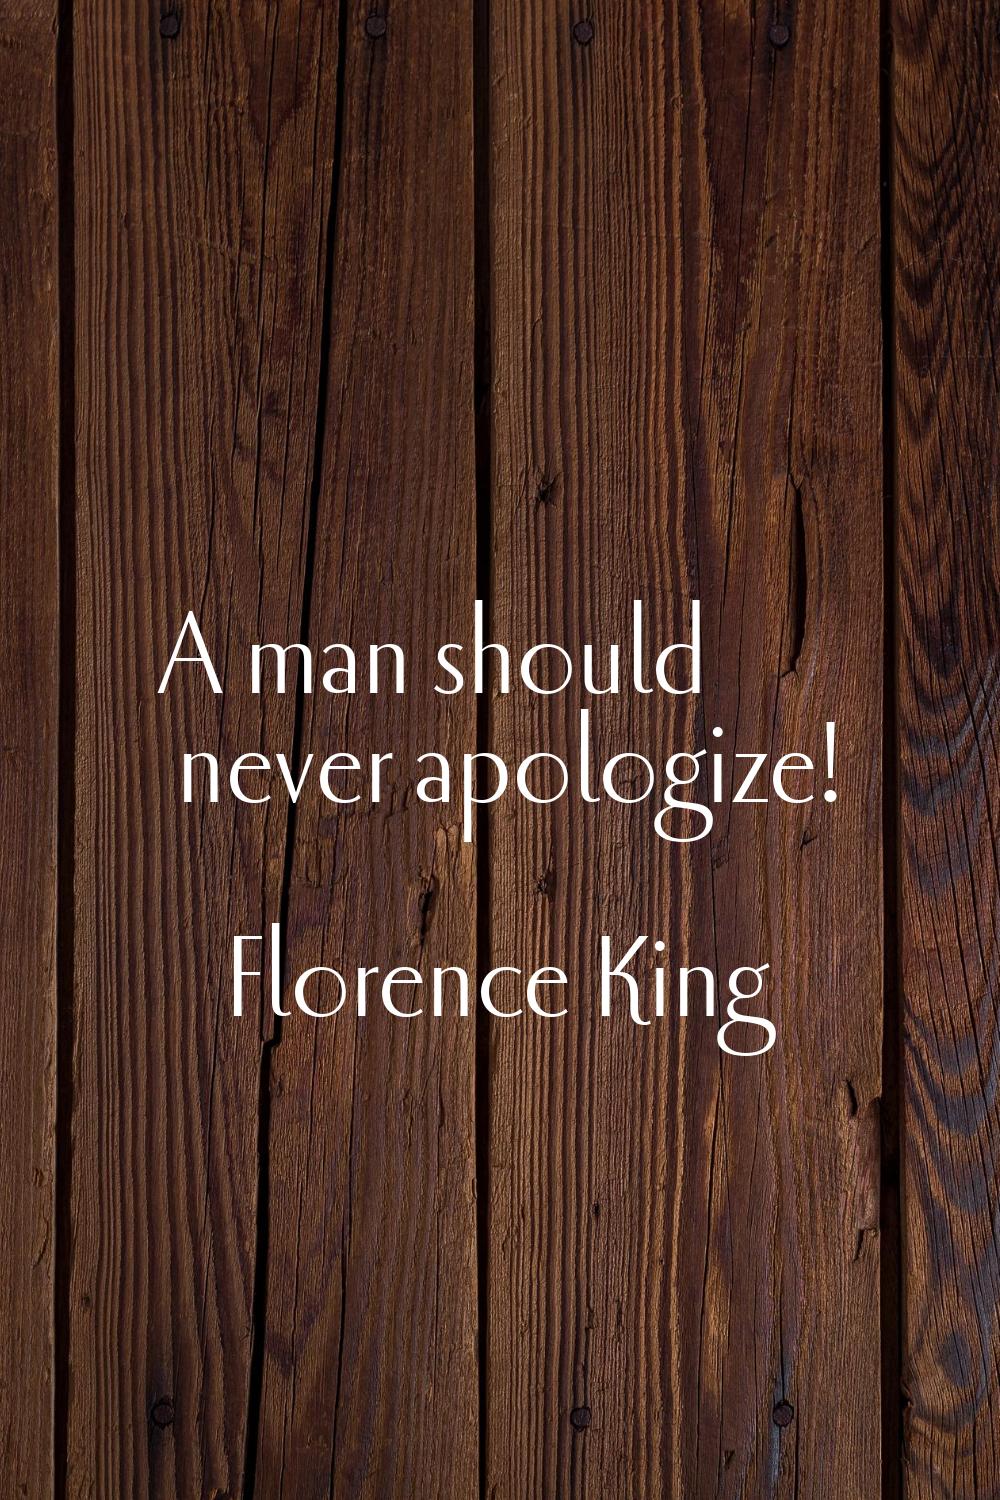 A man should never apologize!